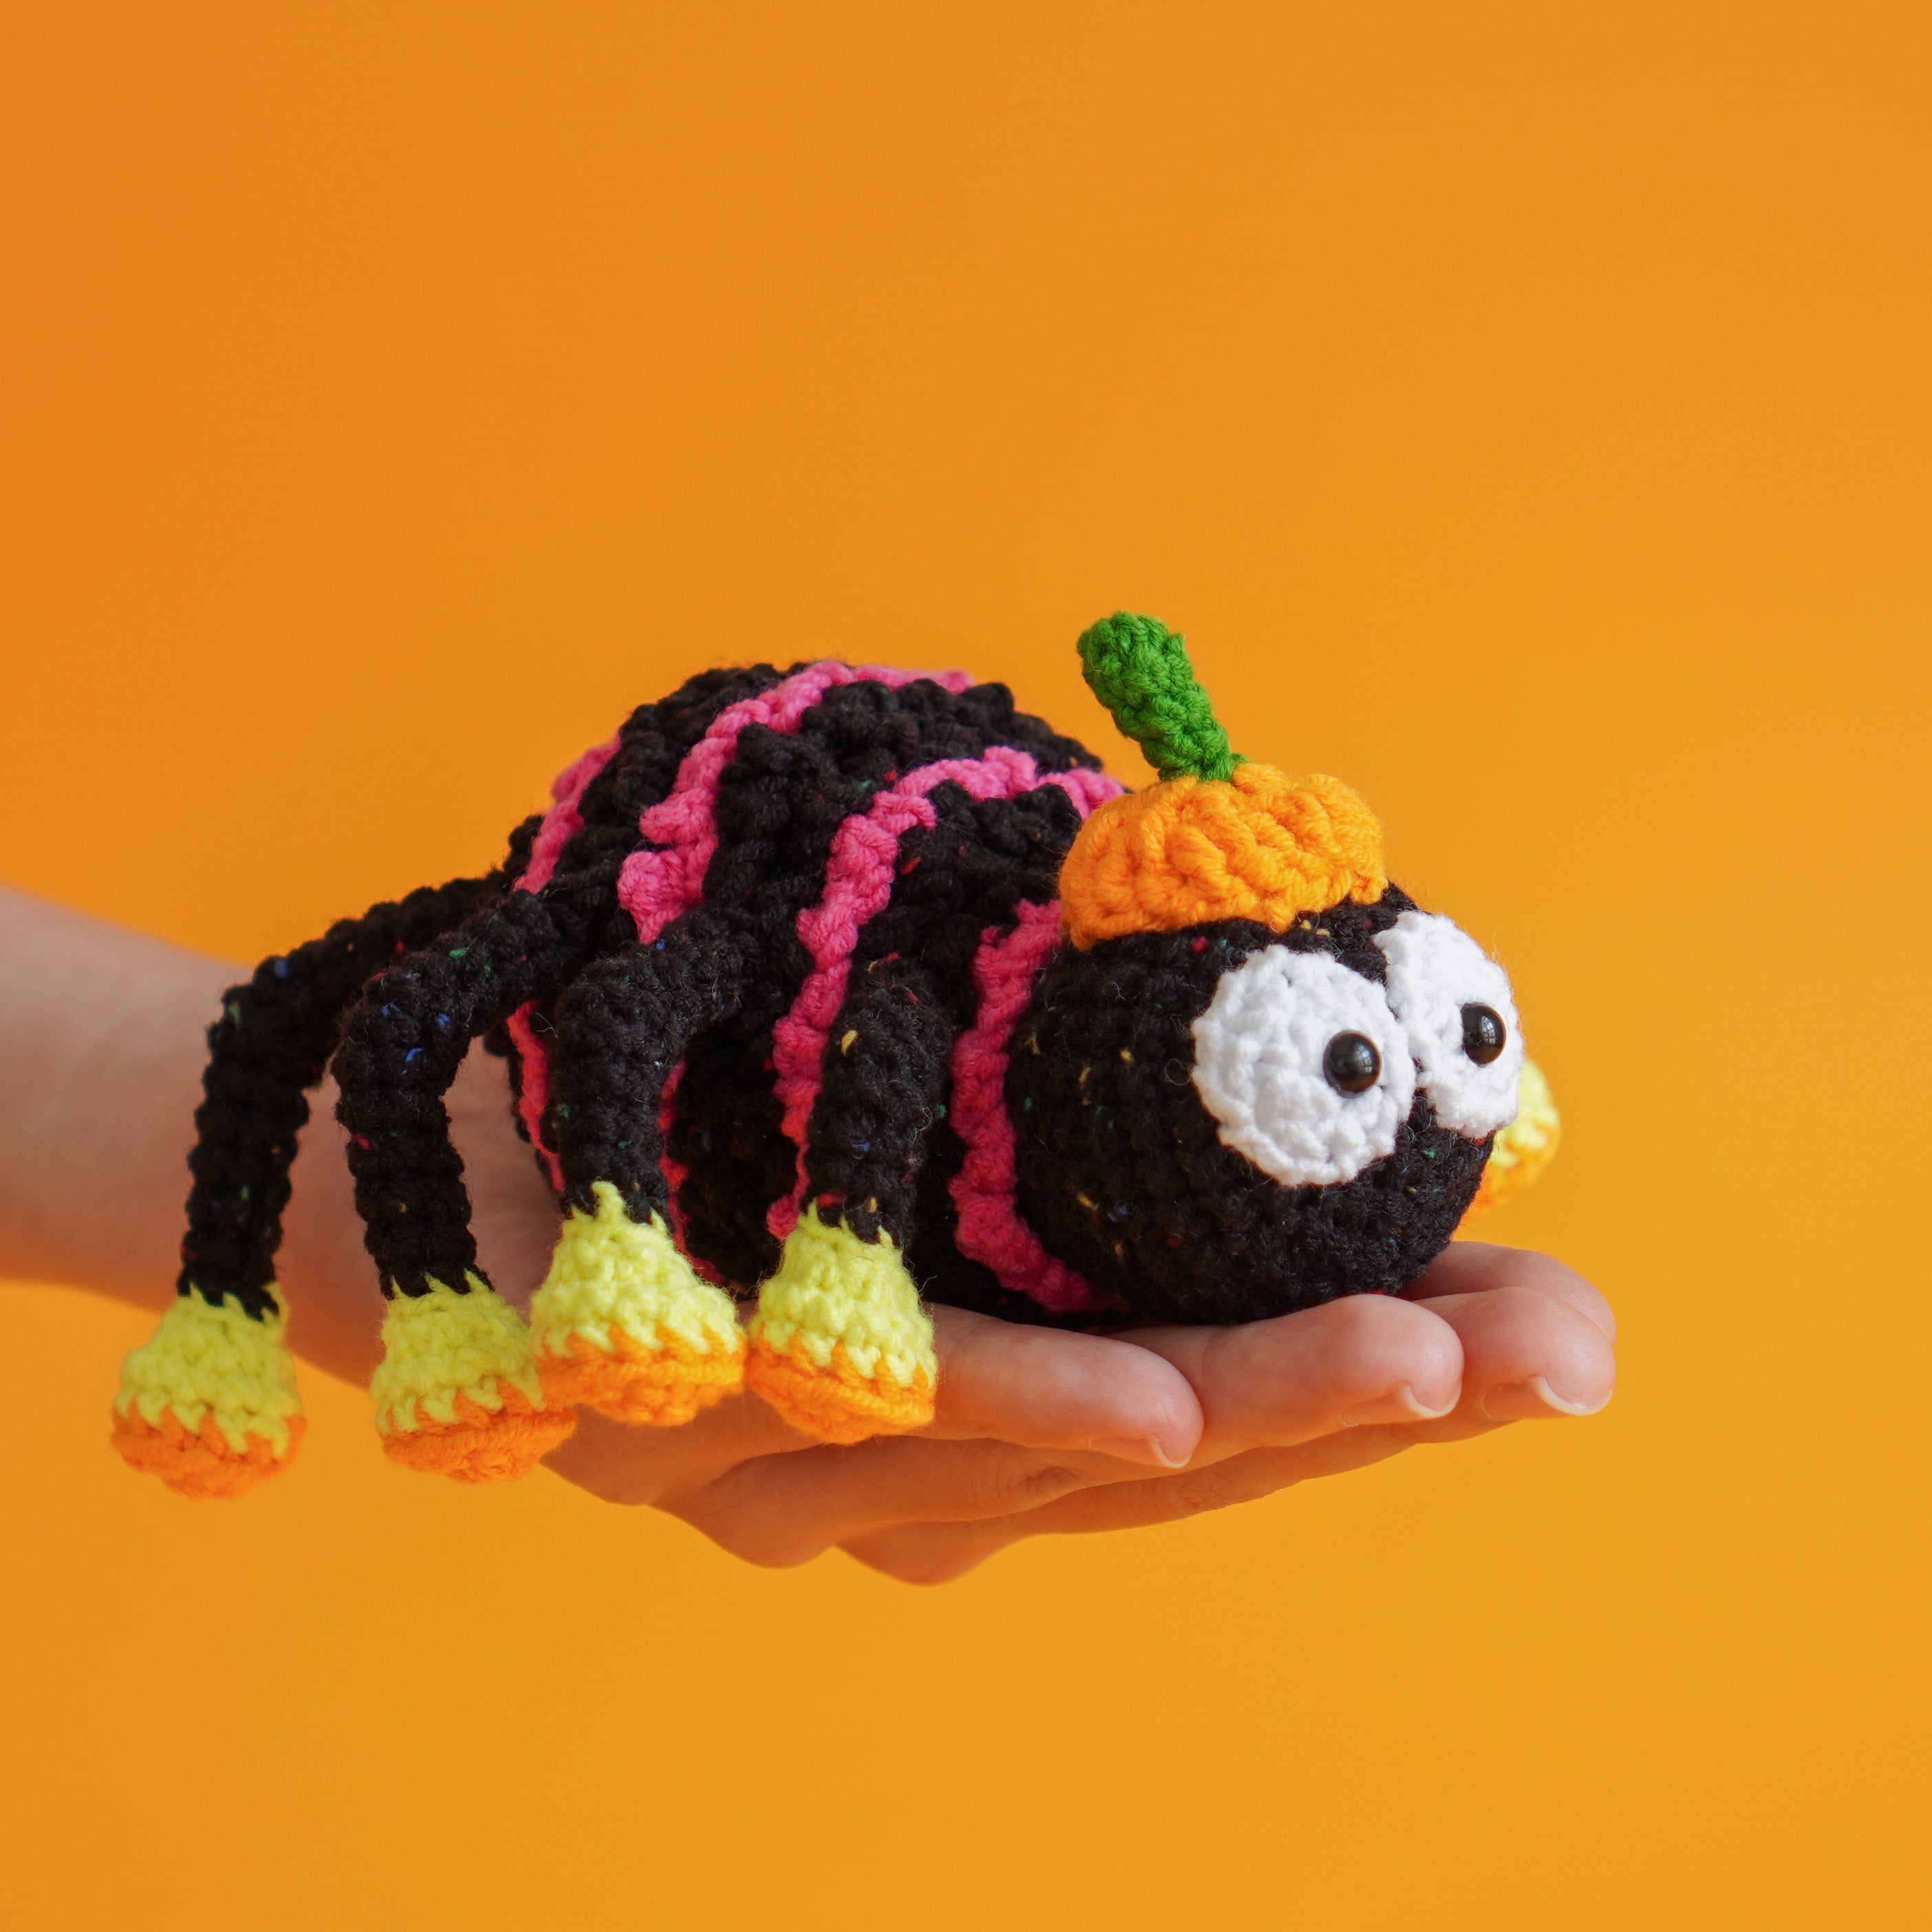 Spider & Manbug Crochet Pattern by Aquariwool Crochet (Crochet Doll Pattern/Amigurumi Pattern for Baby gift)